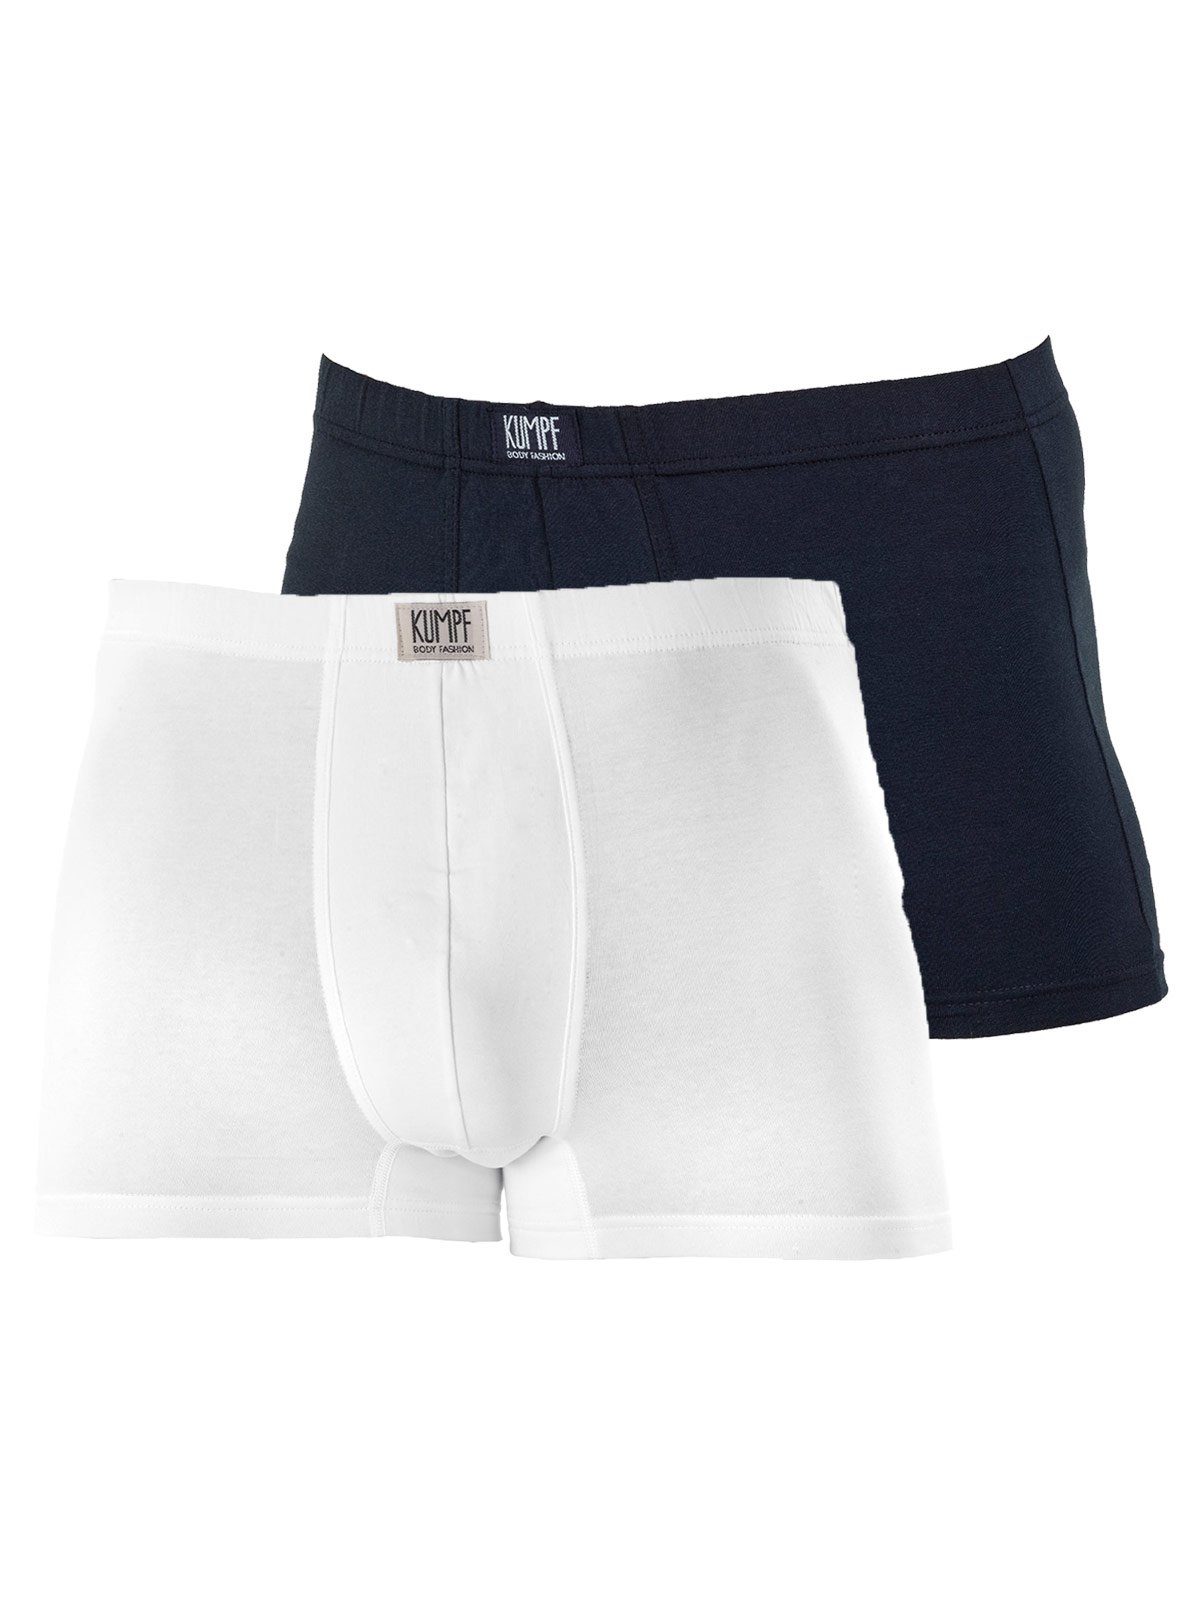 KUMPF Retro Pants 2er Sparpack Herren Pants Bio Cotton (Spar-Set, 2-St) hohe Markenqualität navy weiss